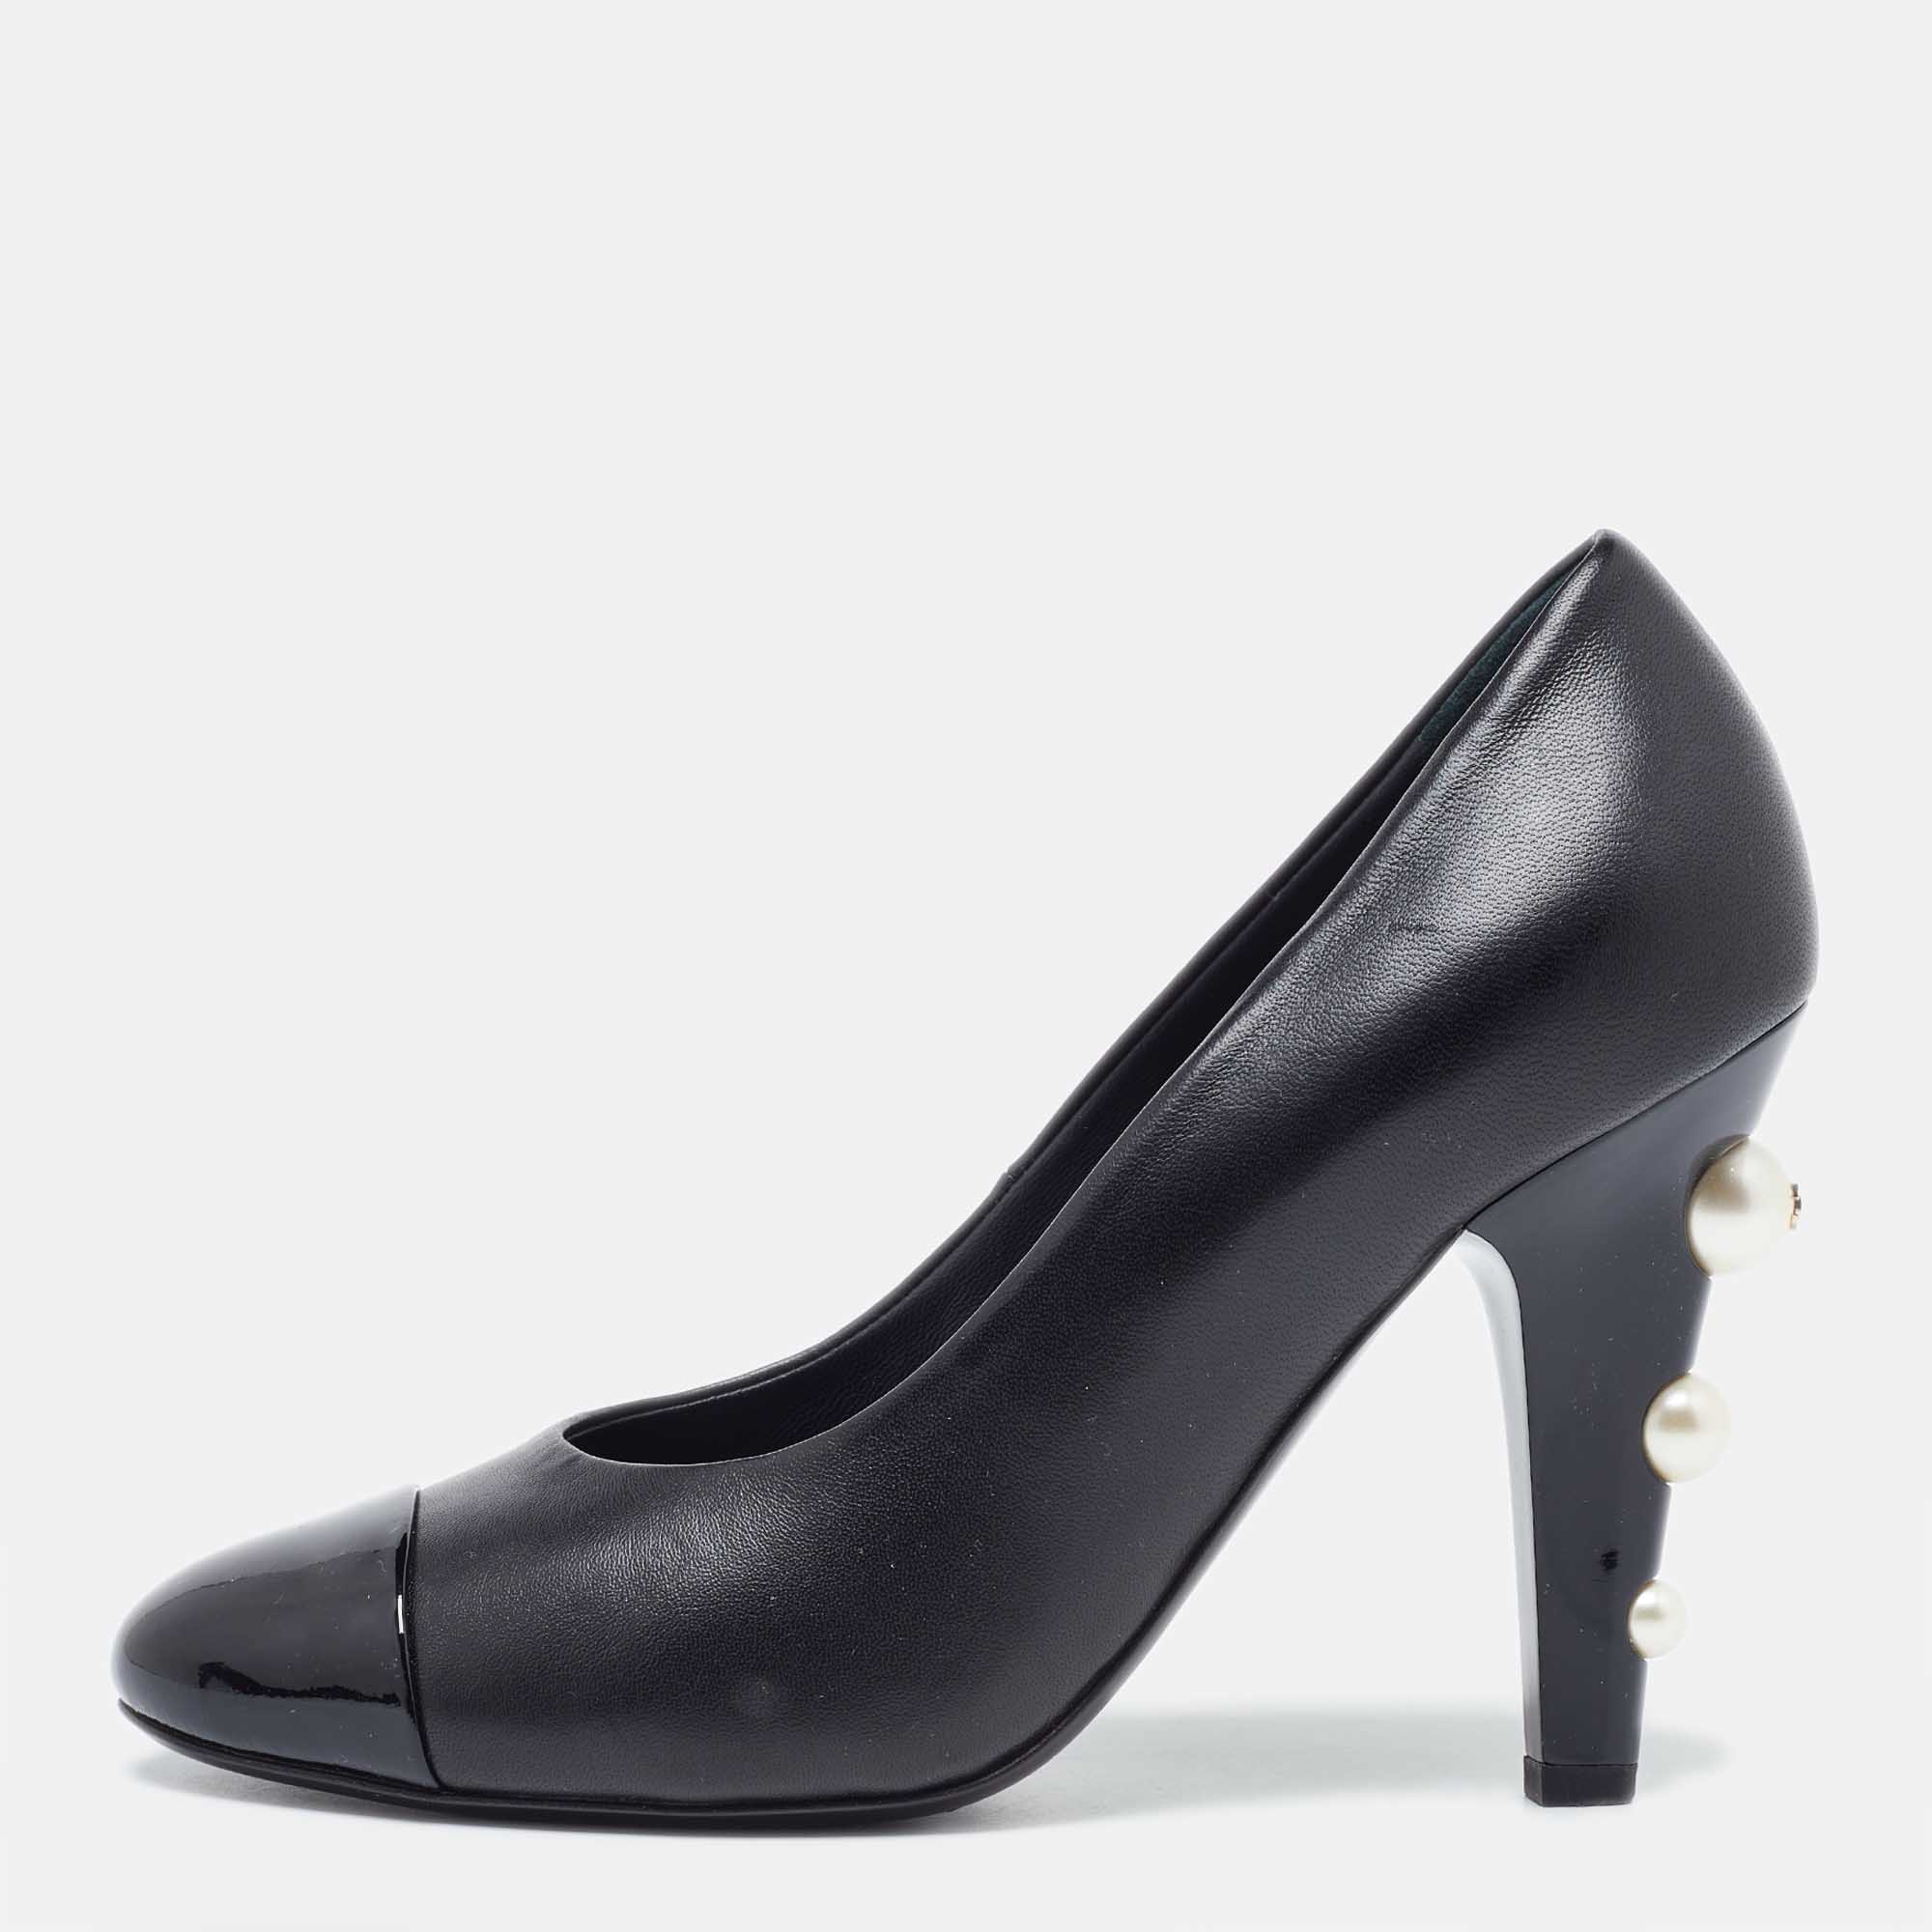 Chanel black leather cc pearl embellished heels cap toe pumps size 36.5